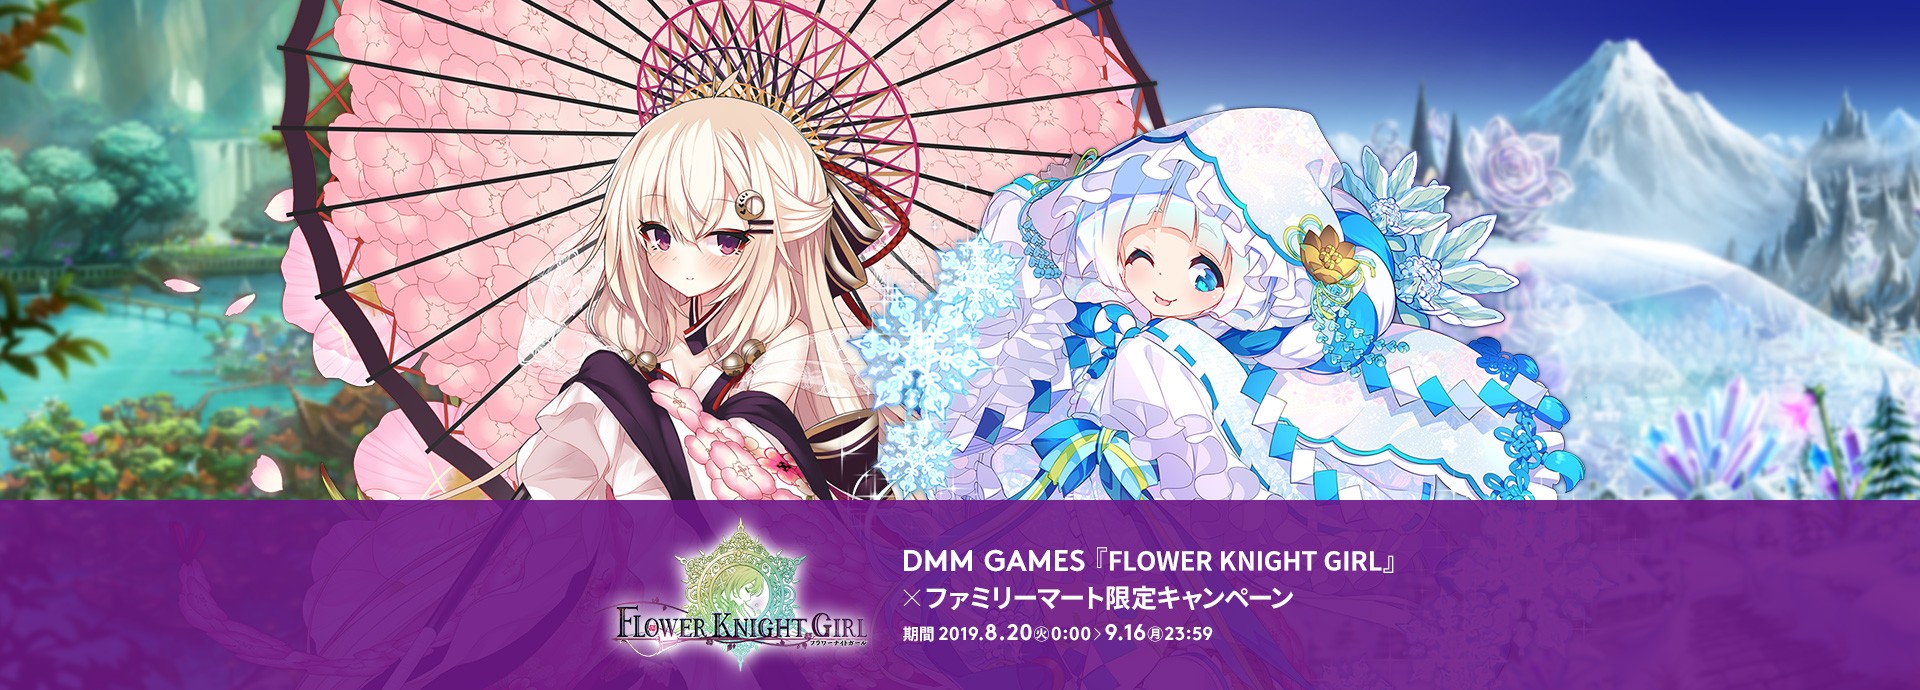 DMM GAMES「FLOWER KNIGHT GIRL」×ファミリーマート限定キャンペーン